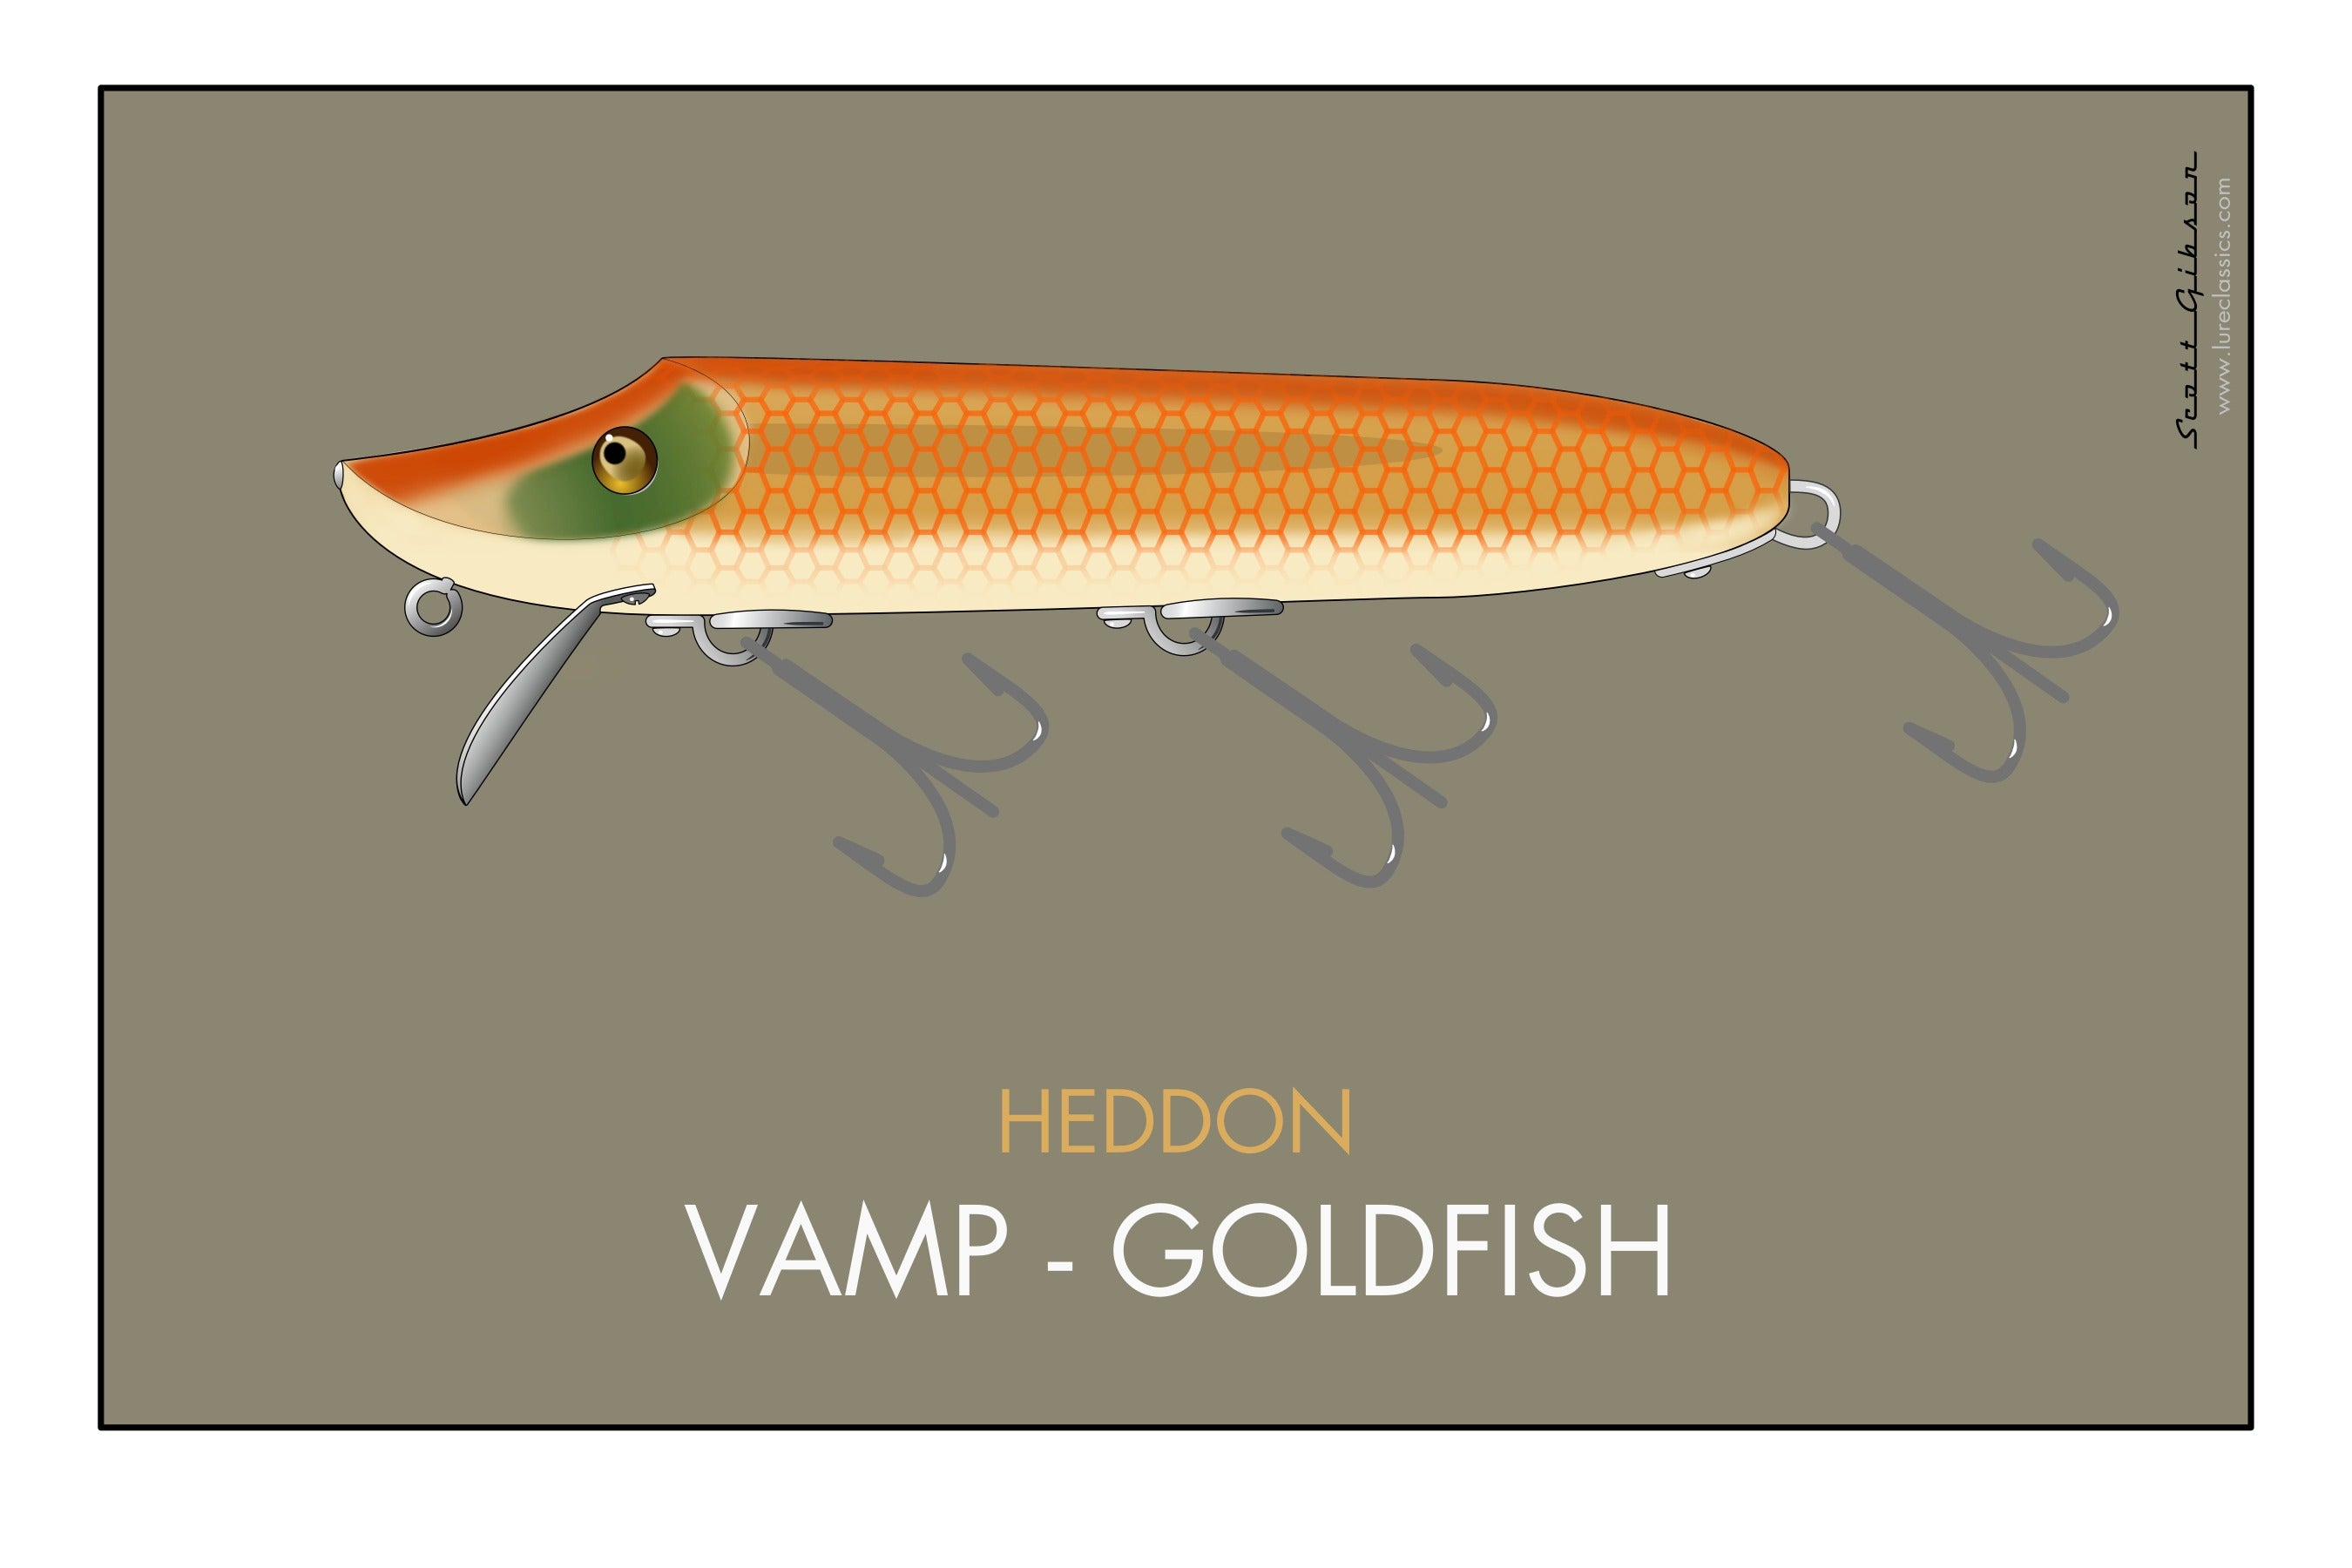 Heddon Vamp 'Goldfish', Fishing Lure Art